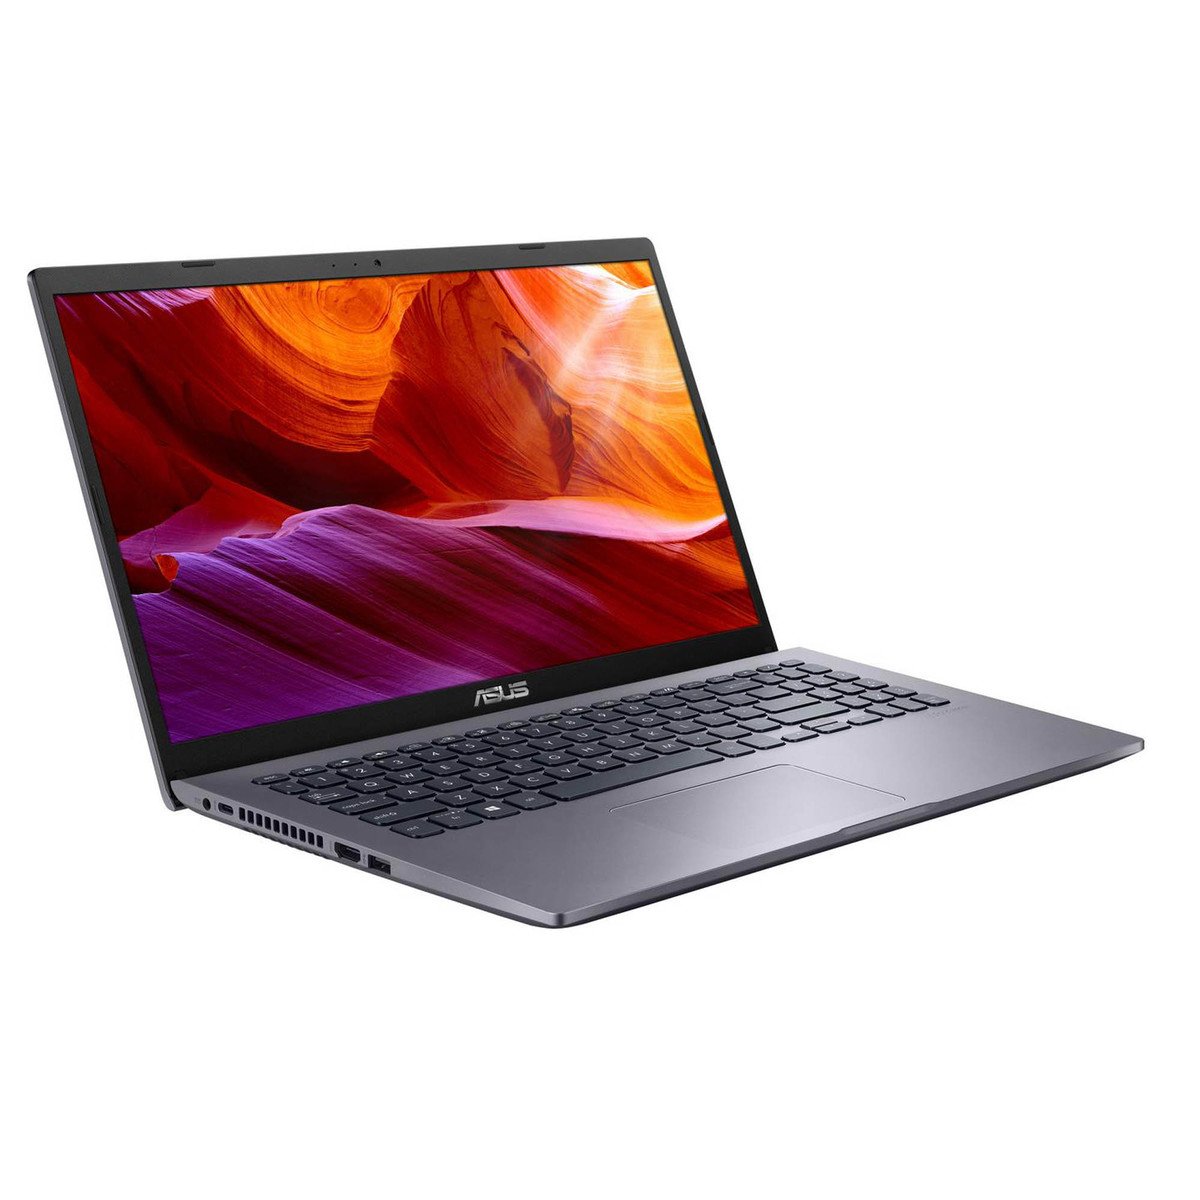 Asus NoteBook X509FB-EJ051T 15.6 inch FHD 1920x1080, Laptop, Intel Core i7-8565U, HDD 1TB,4GBRAM,Windows 10,Grey